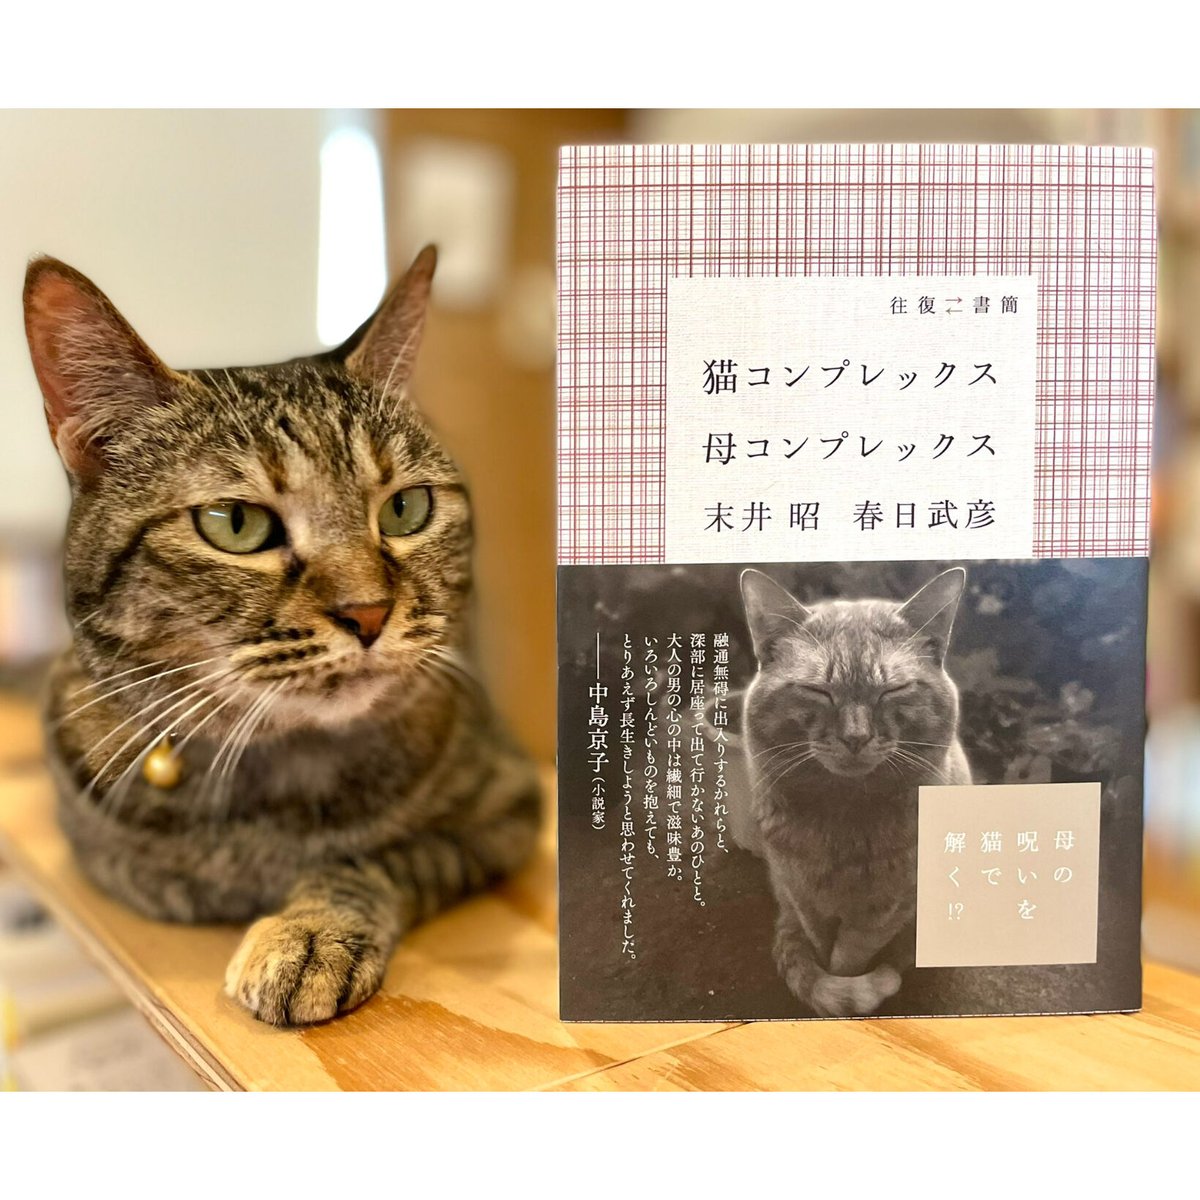 Shop　Meow　Cat's　猫コンプレックス母コンプレックス　β　Books　Virtual